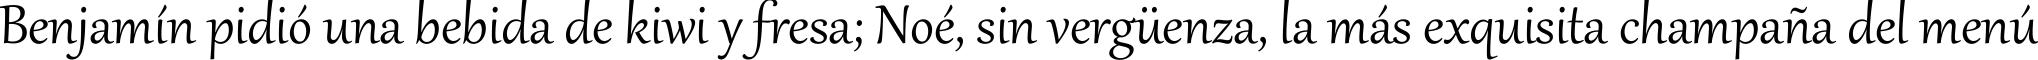 Пример написания шрифтом Gabriola текста на испанском